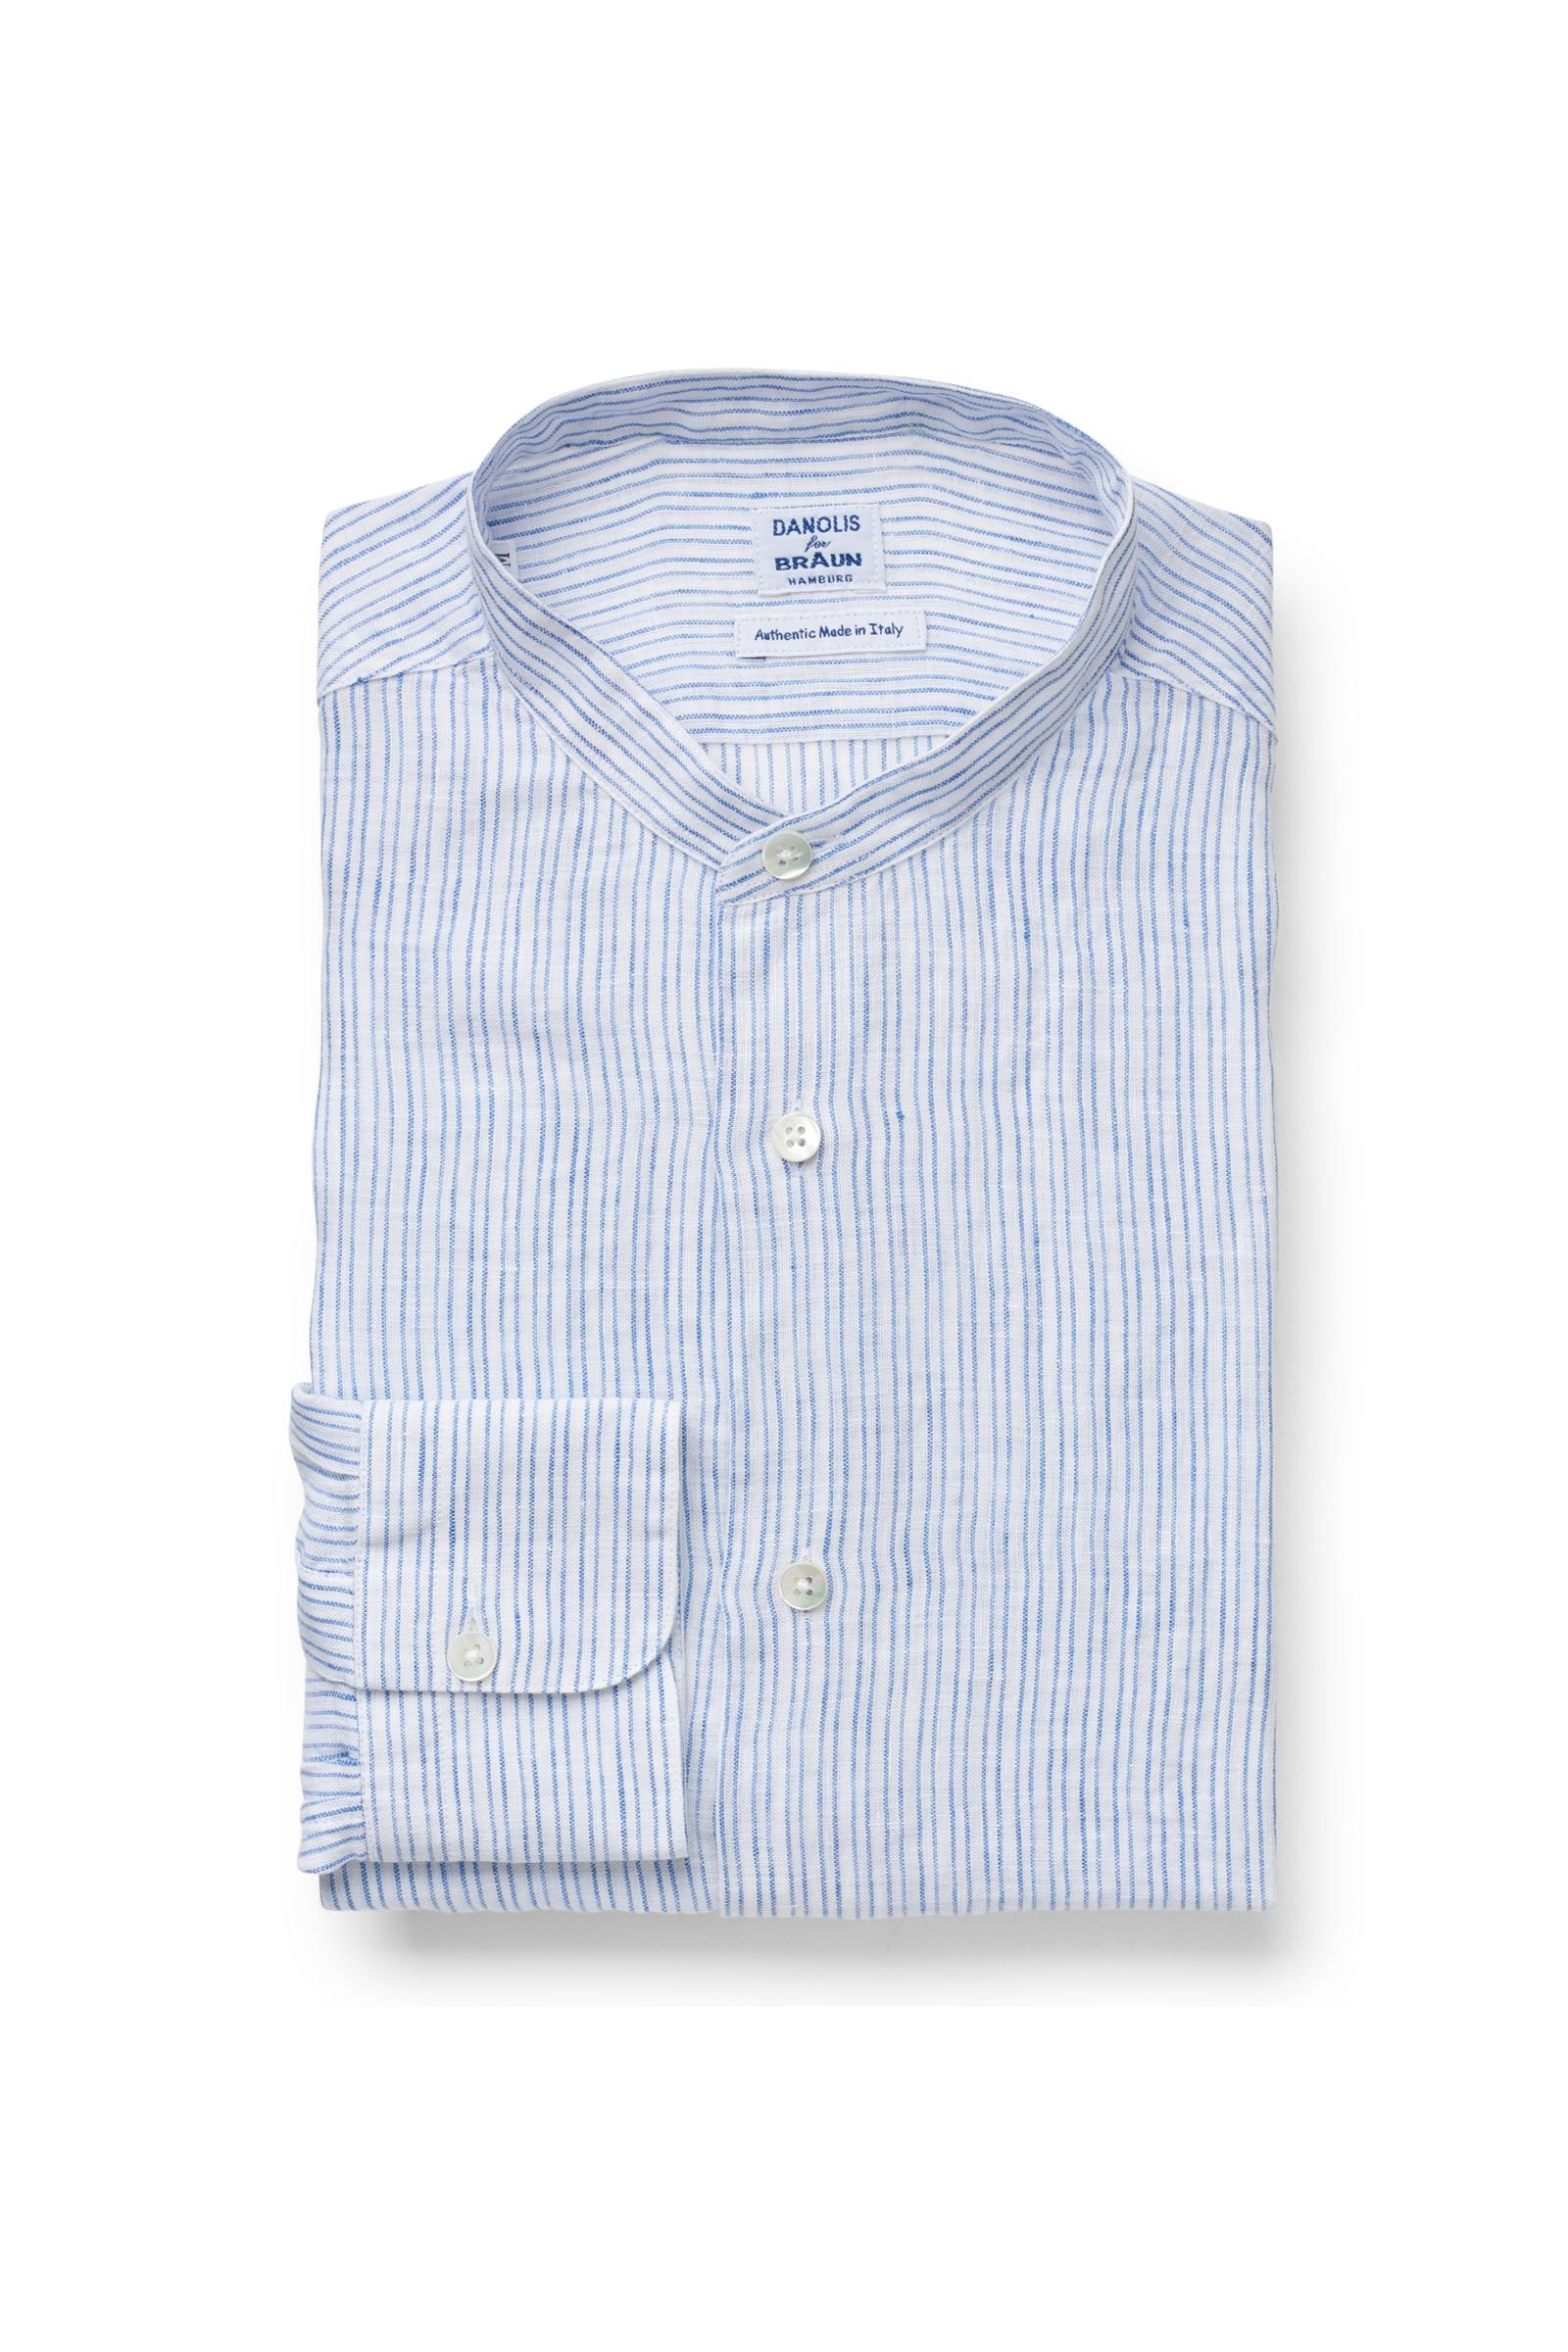 Linen shirt grandad collar grey-blue striped